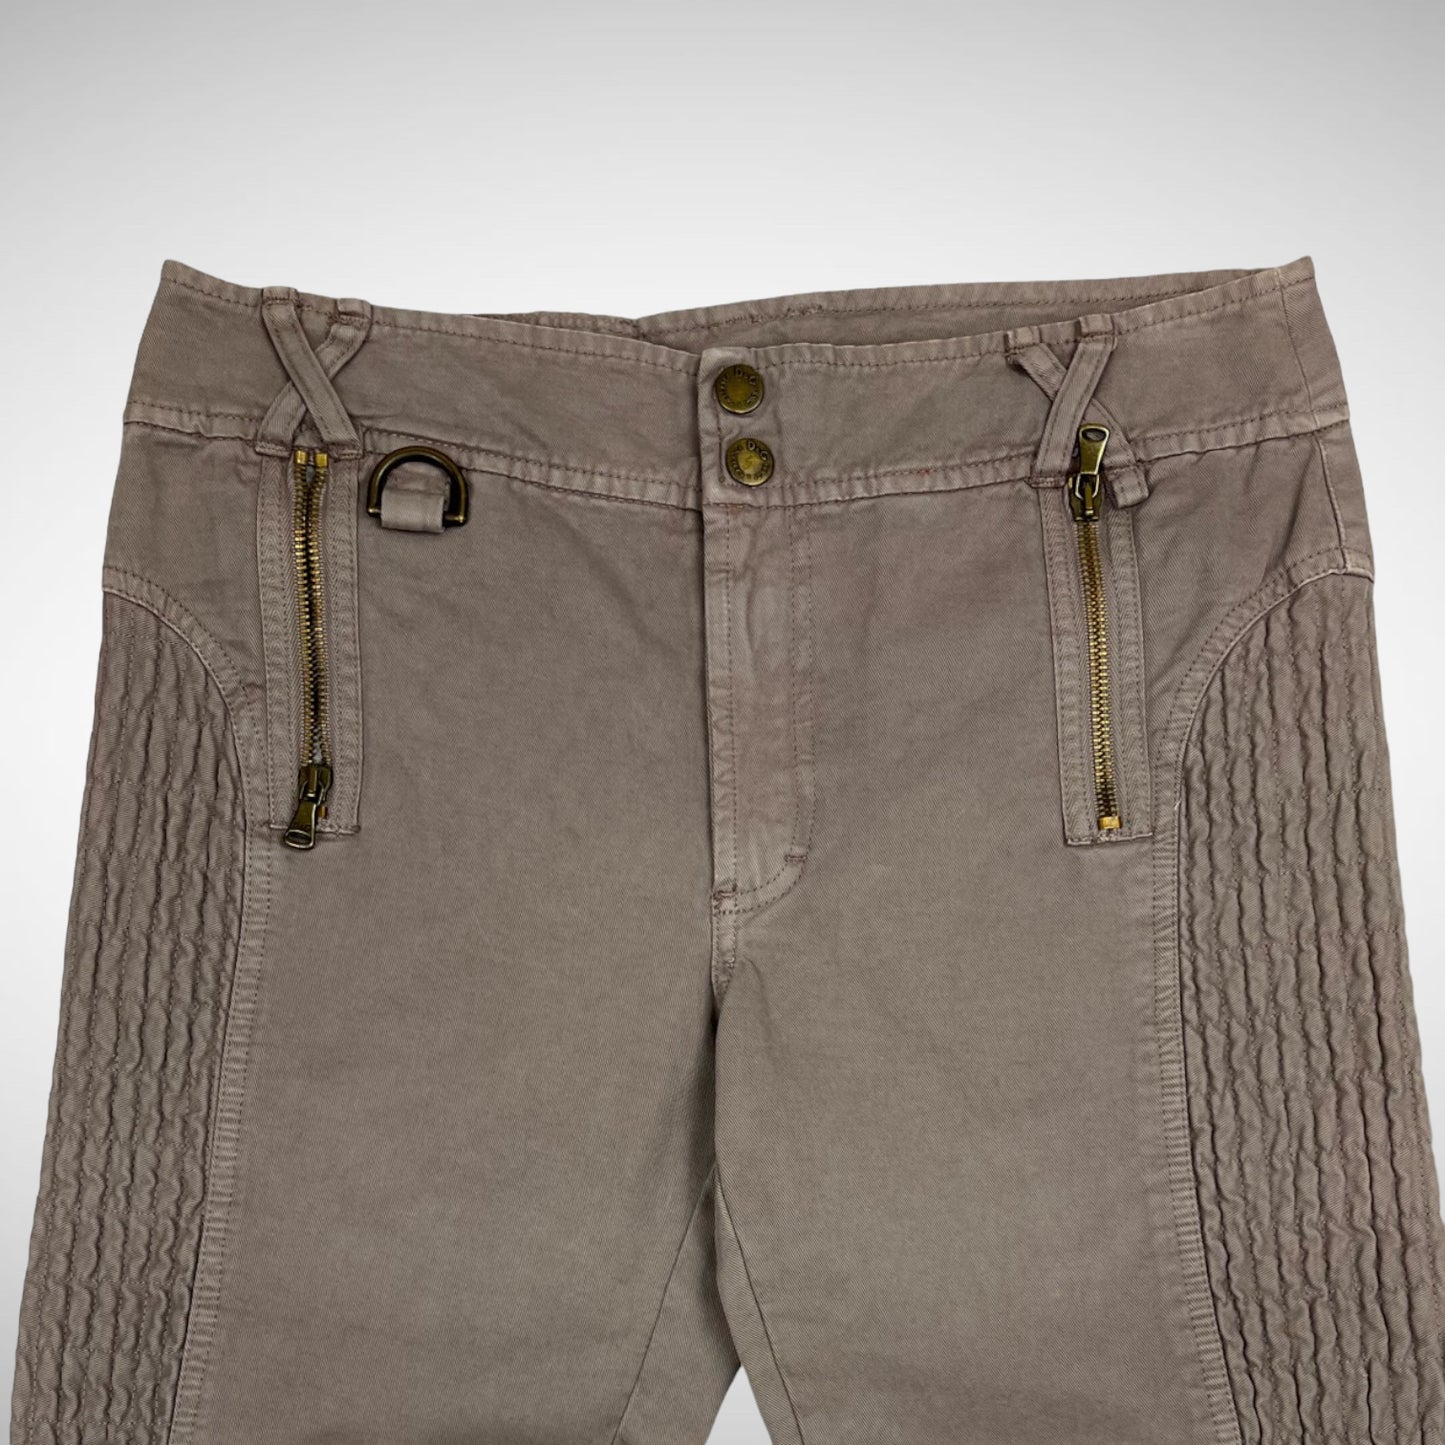 D&G Yarn Dyed Adjustable Pants